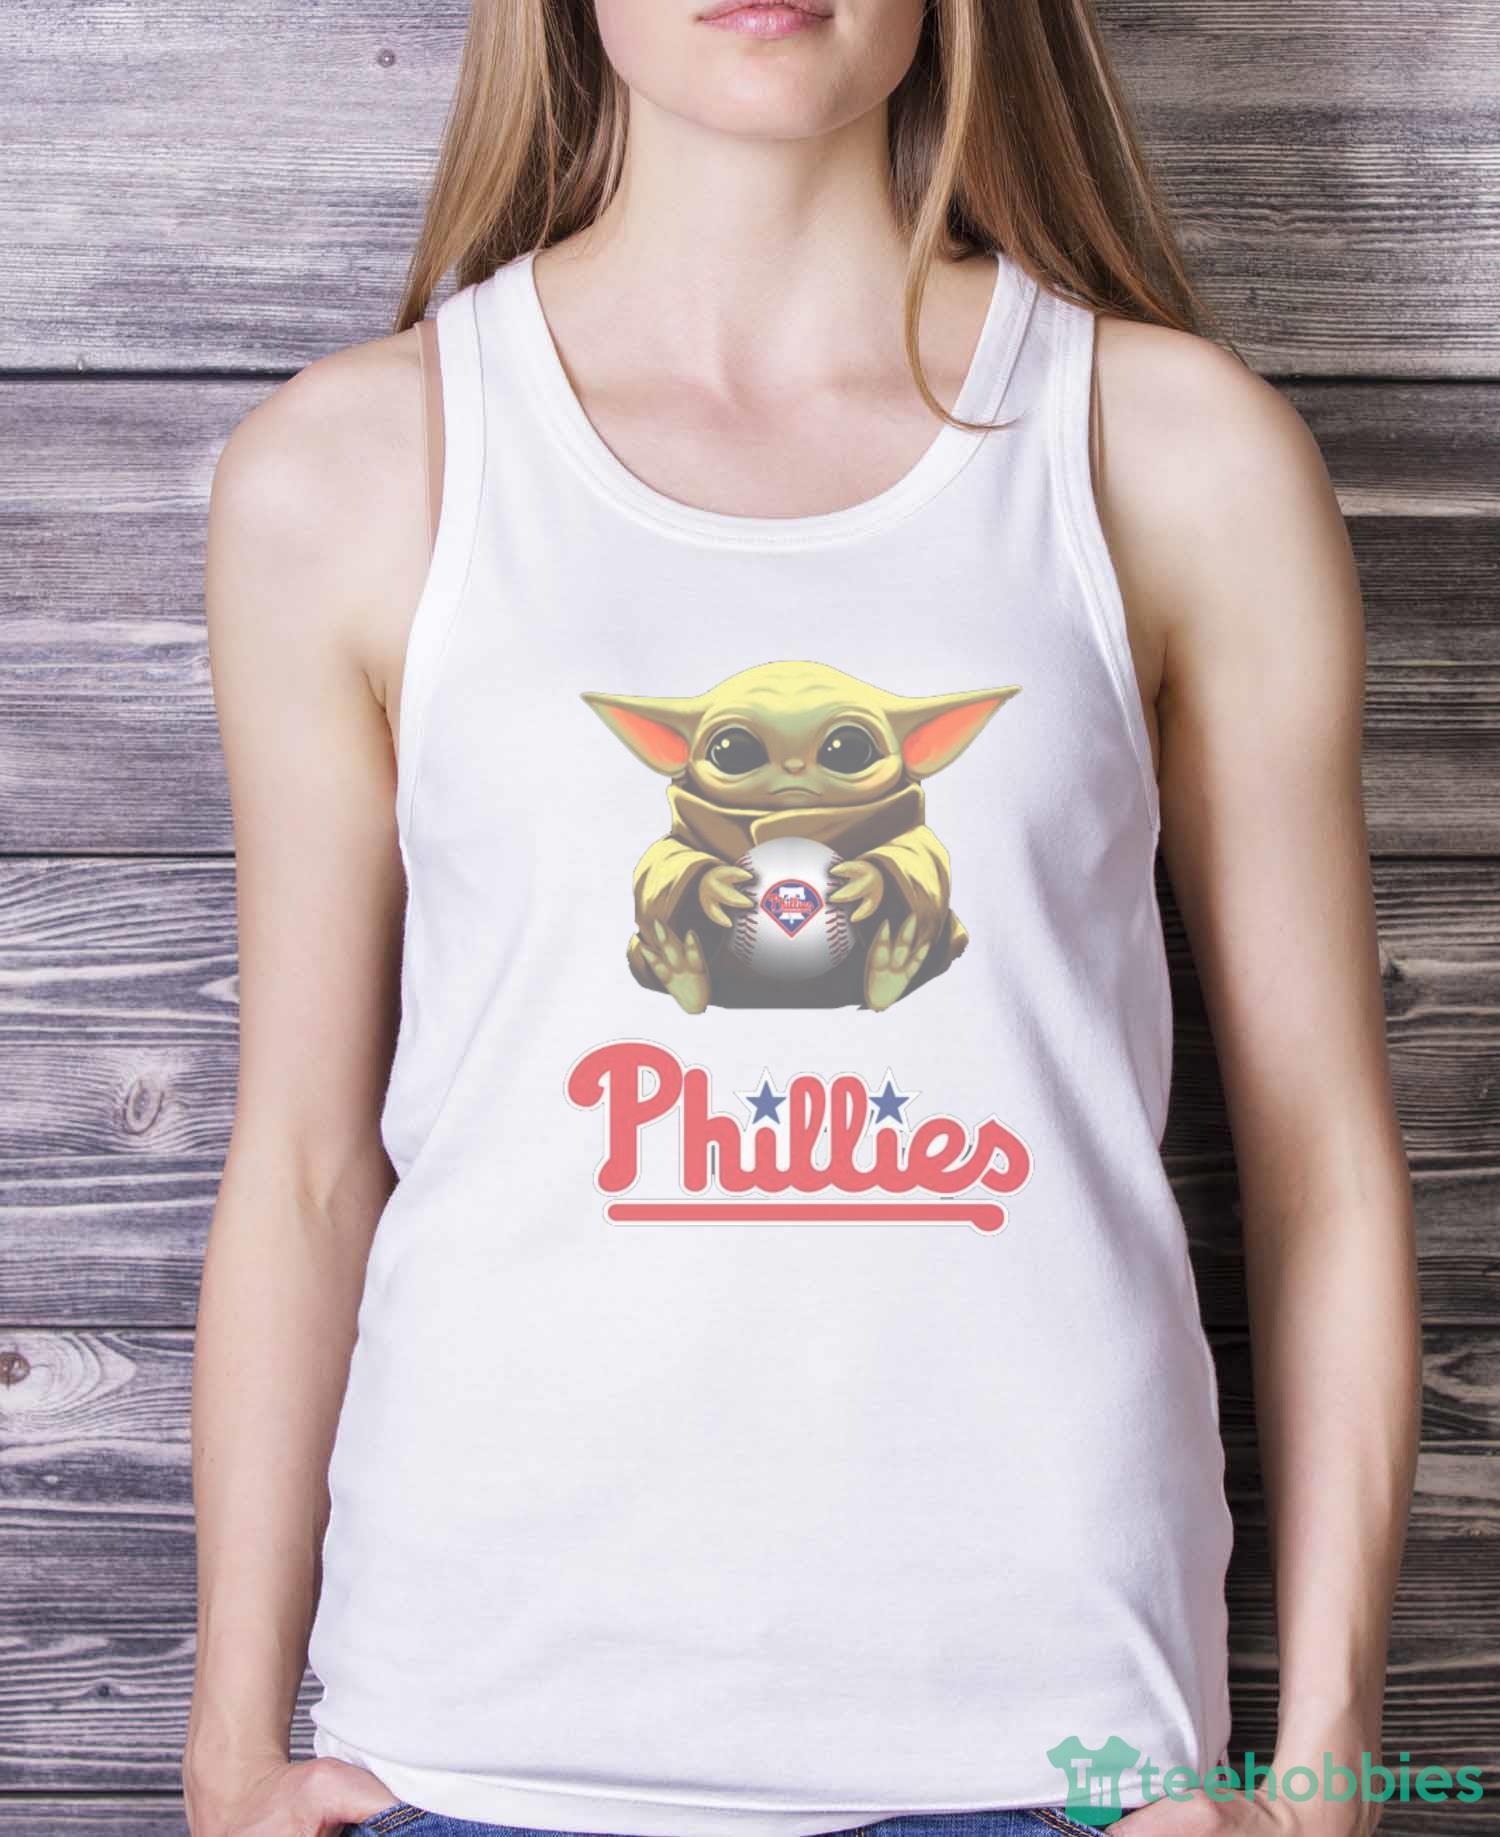 MLB Baseball Philadelphia Phillies Star Wars Baby Yoda Shirt T Shirt - White Ladies Tank Top